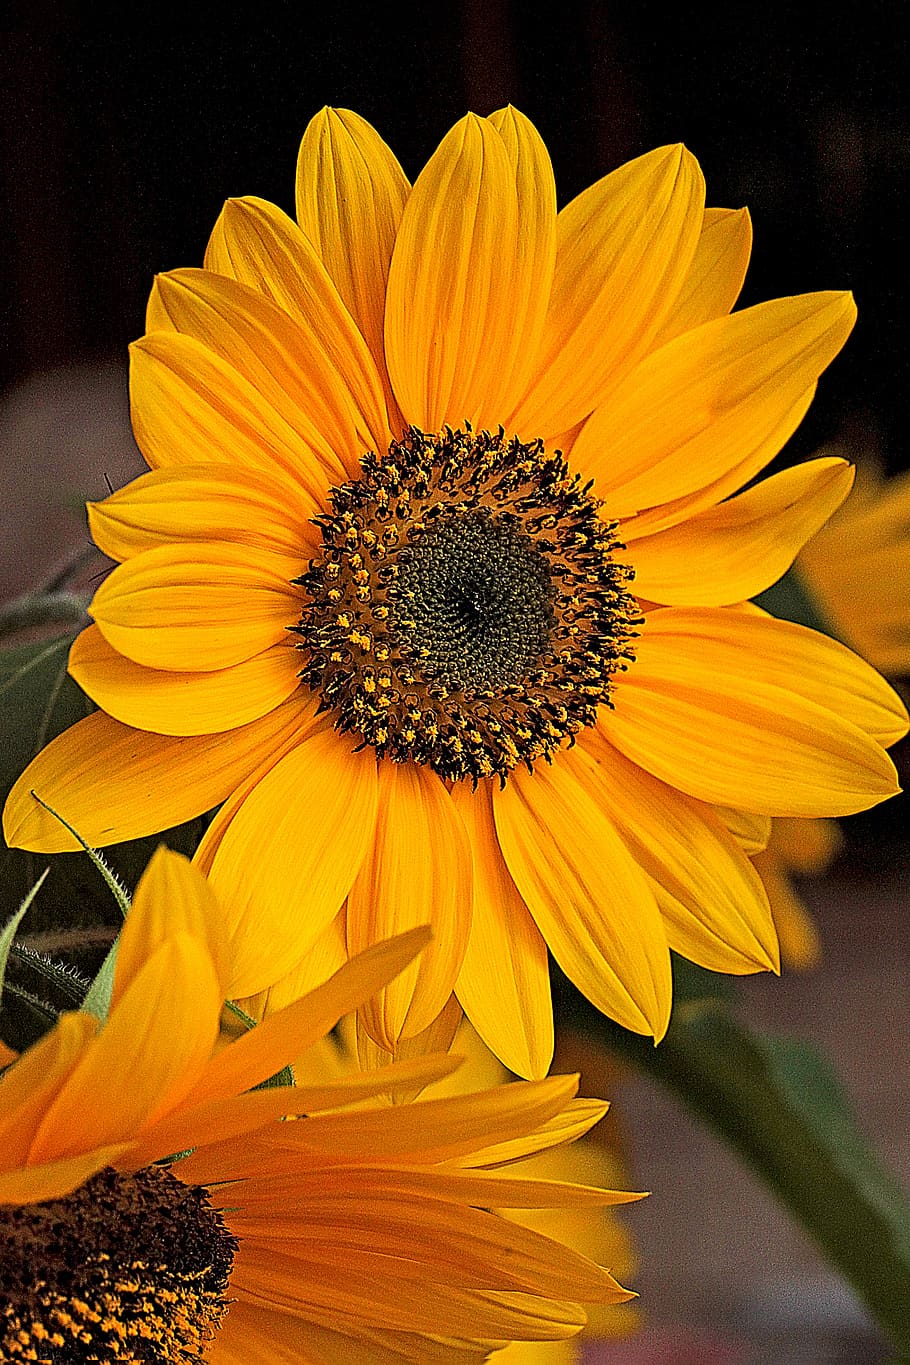 bunga matahari, bunga, berbunga, maju, bunga matahari hias, bersih, musim panas, benang sari, kelopak, daun